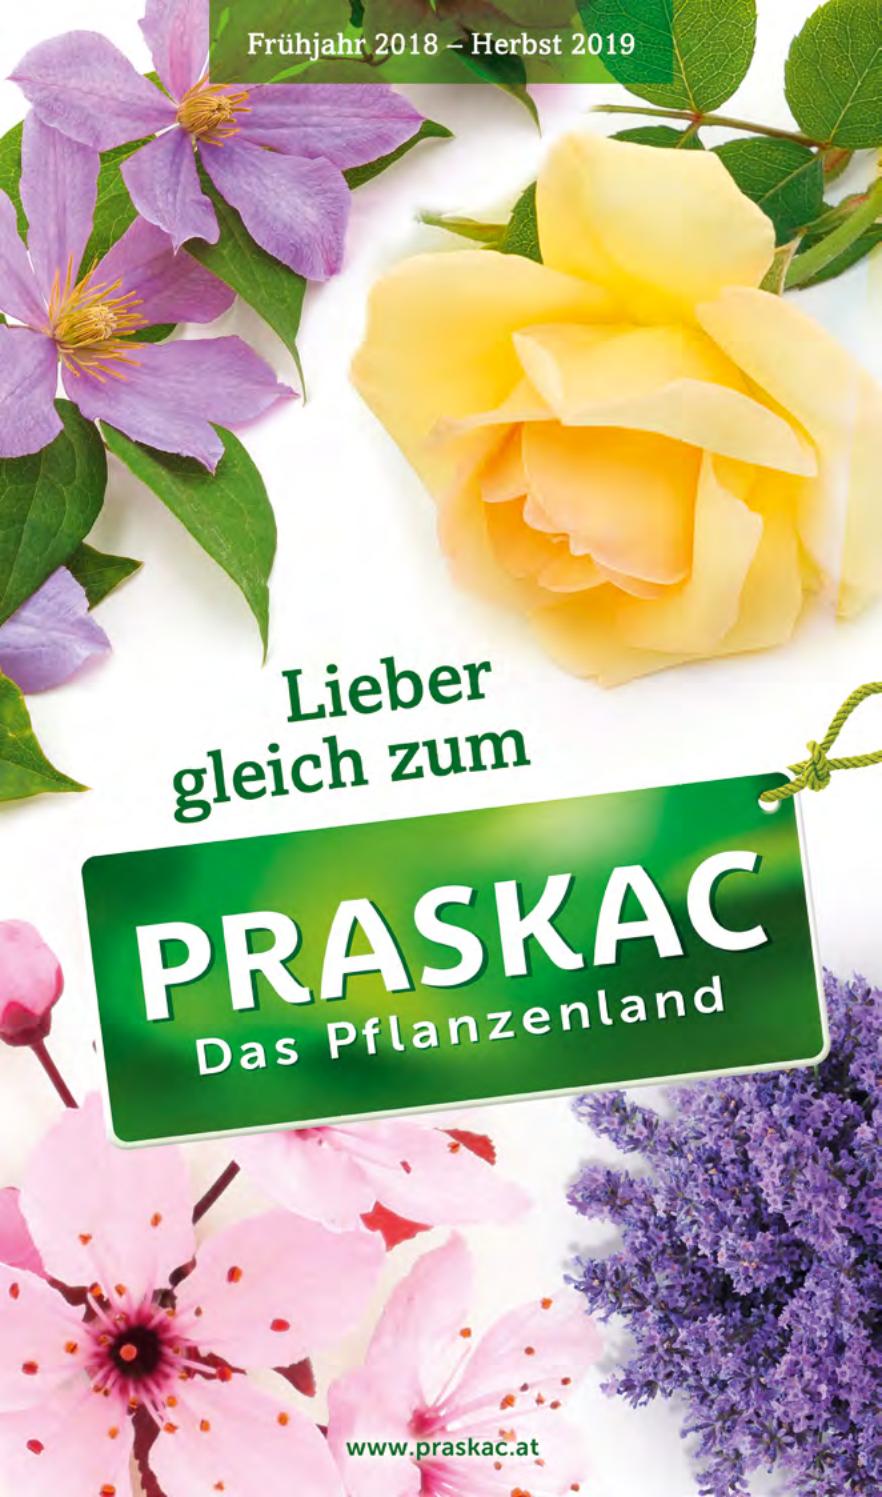 Terrassenpflanzen Ideen Neu Katalog 2018 2019 by Praskac Pflanzenland issuu